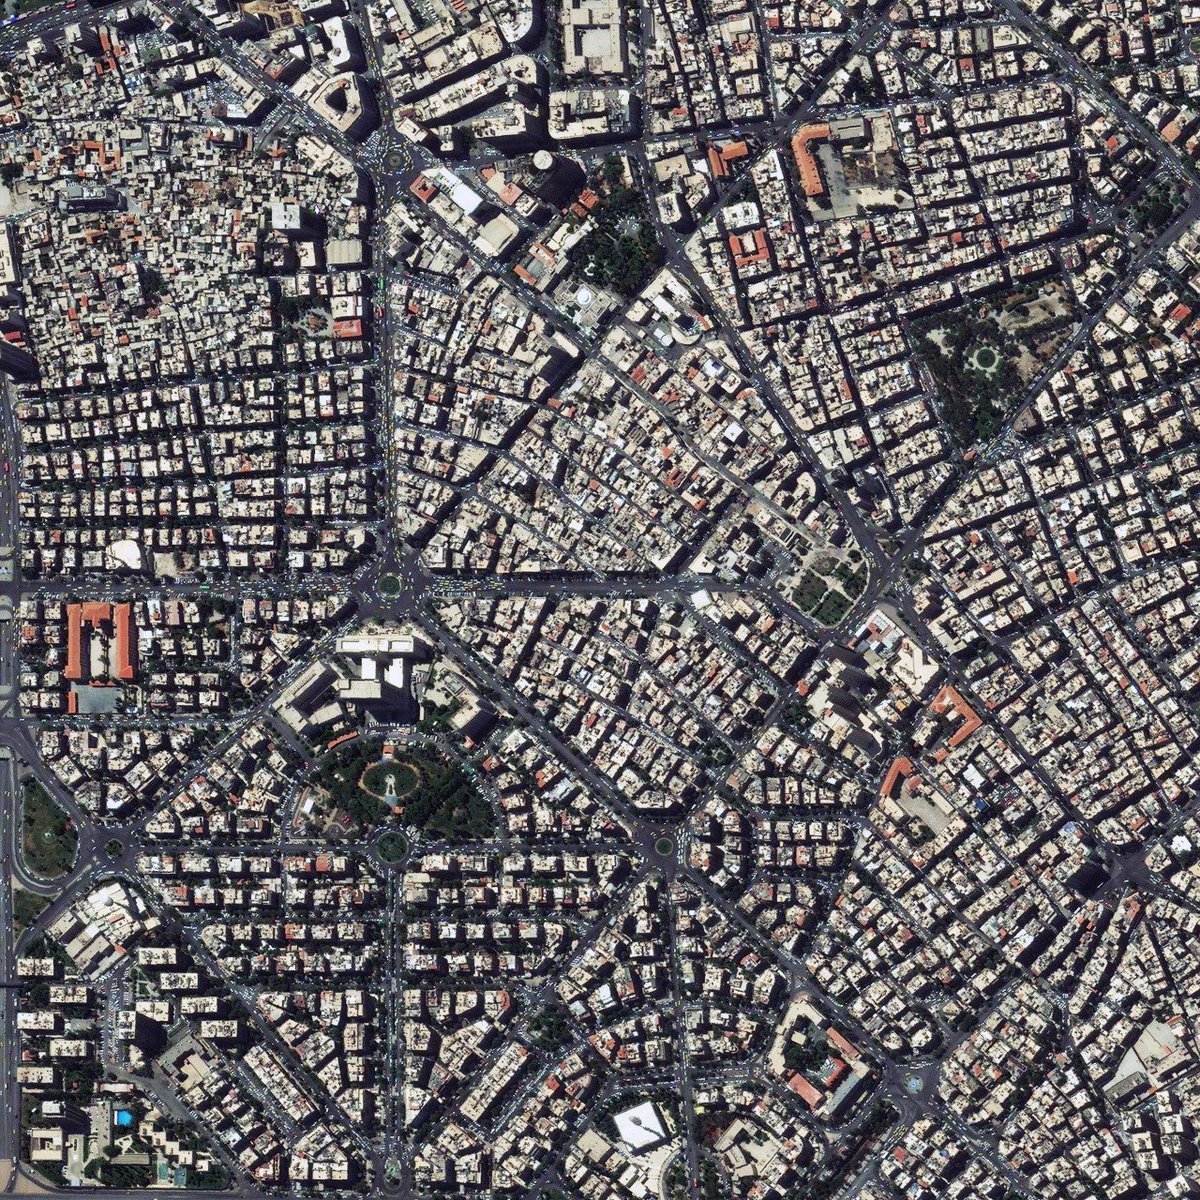 13. Damascus (Syria)